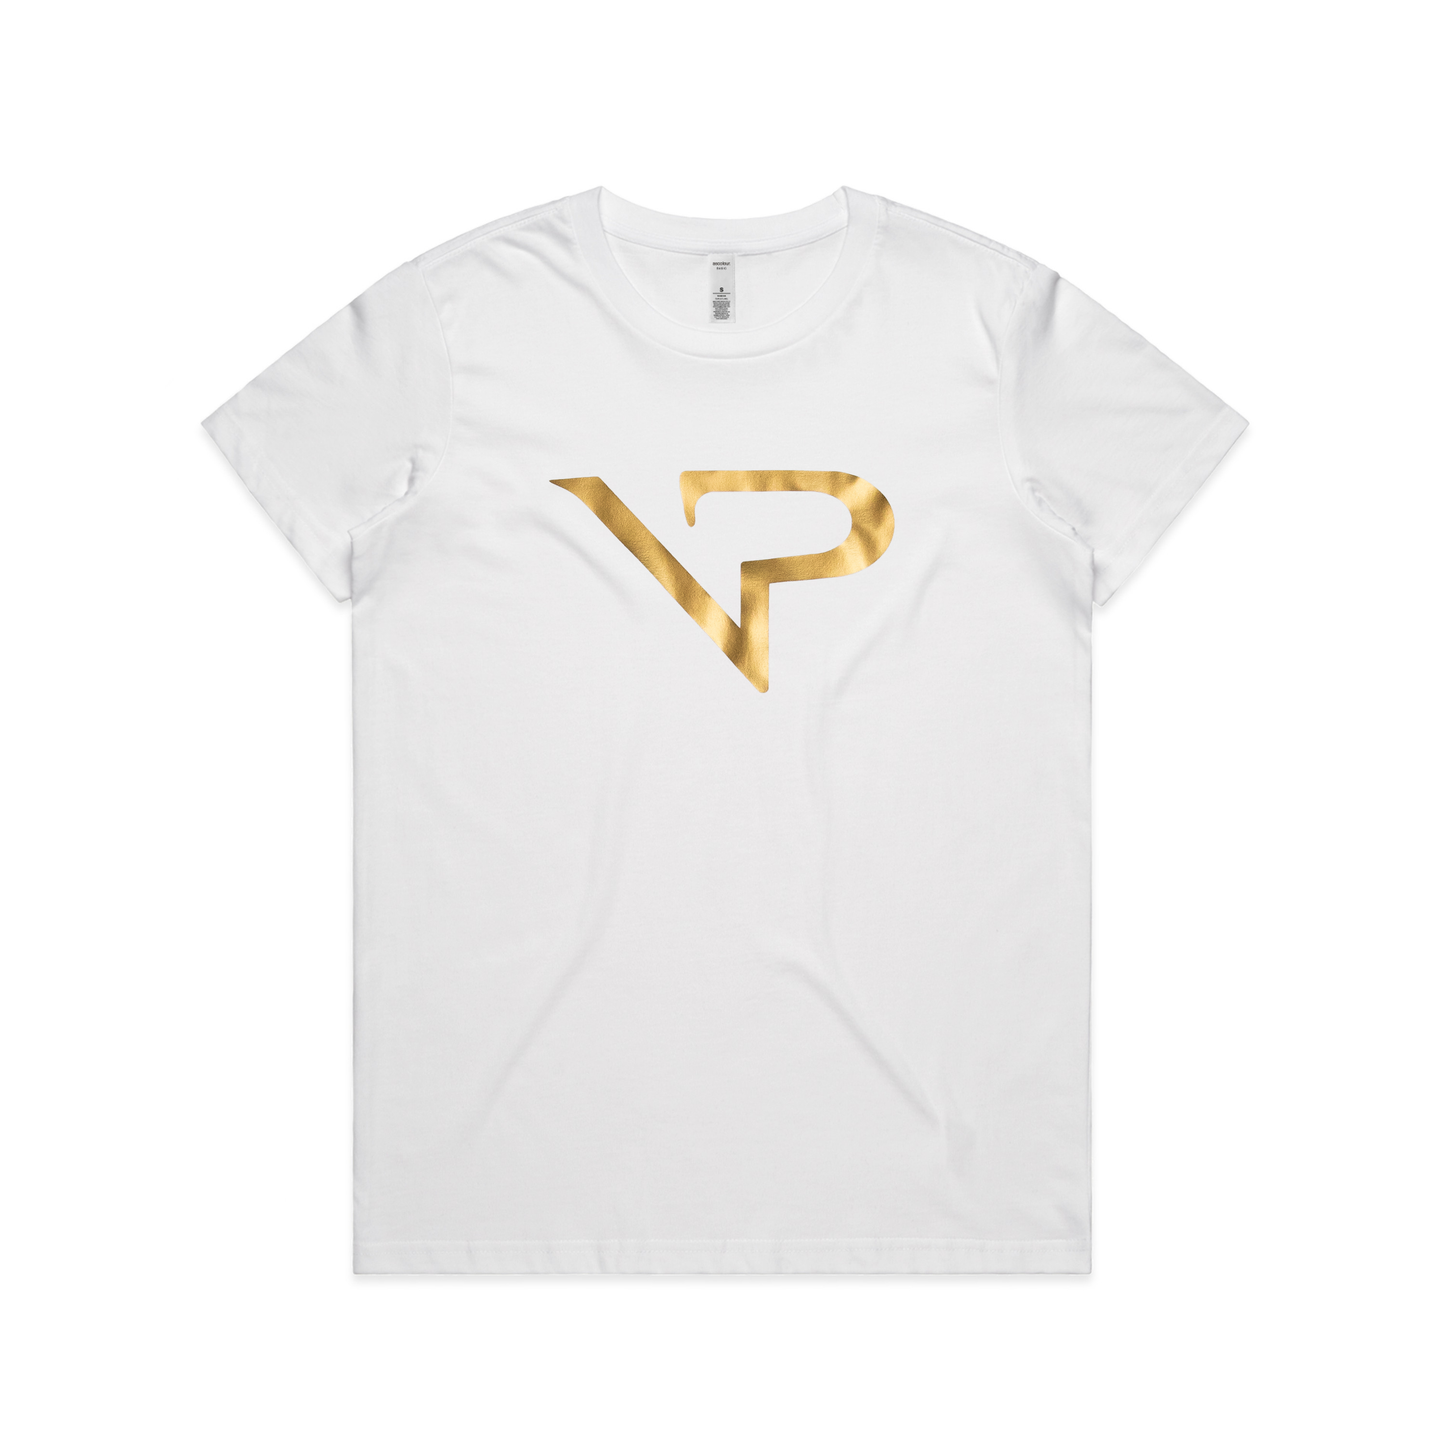 Women's Classic VP logo Shirt - White